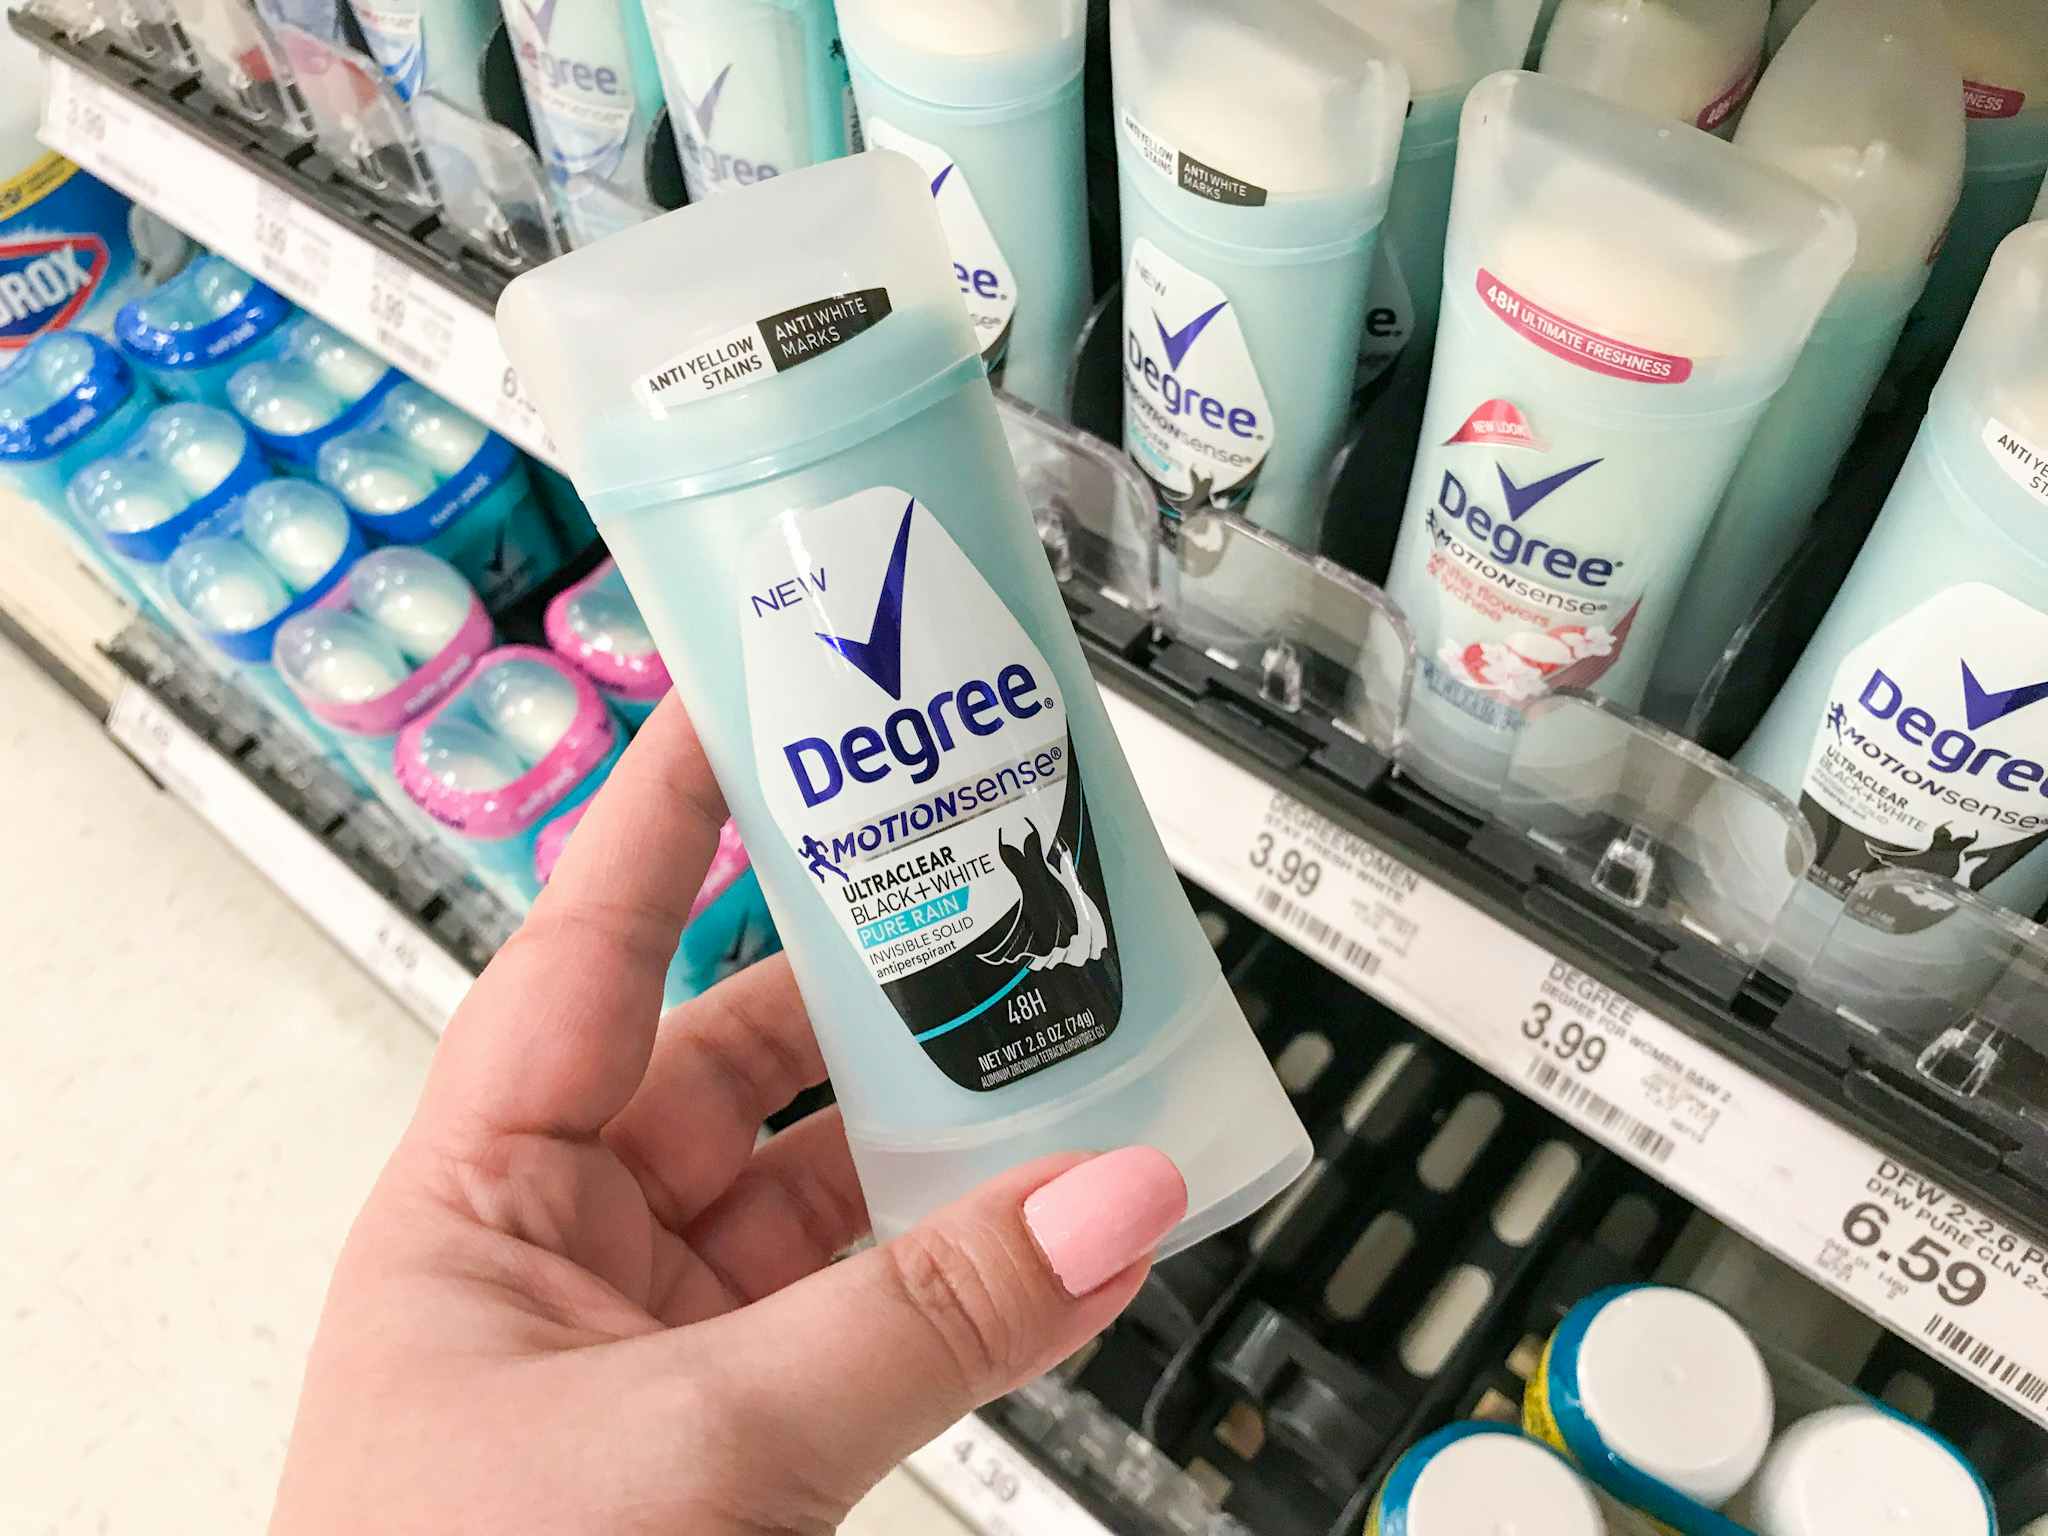 Degree Deodorant, as Low as $2.24 on Amazon